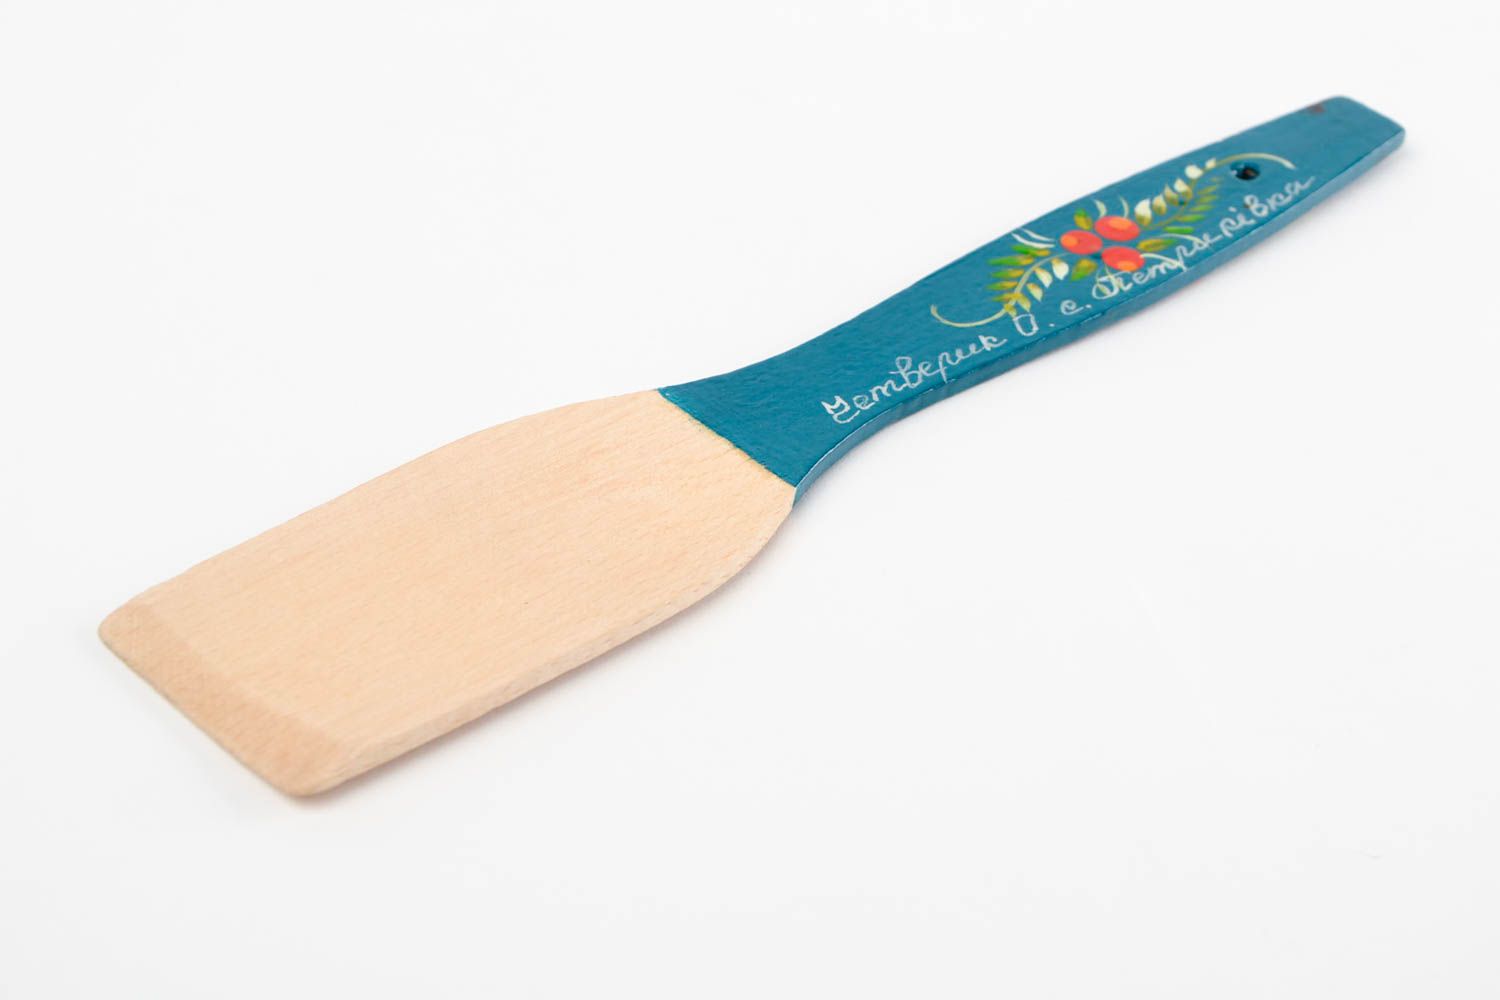 Handmade spatula designer litchen utensils decor ideas wooden spatula  photo 5